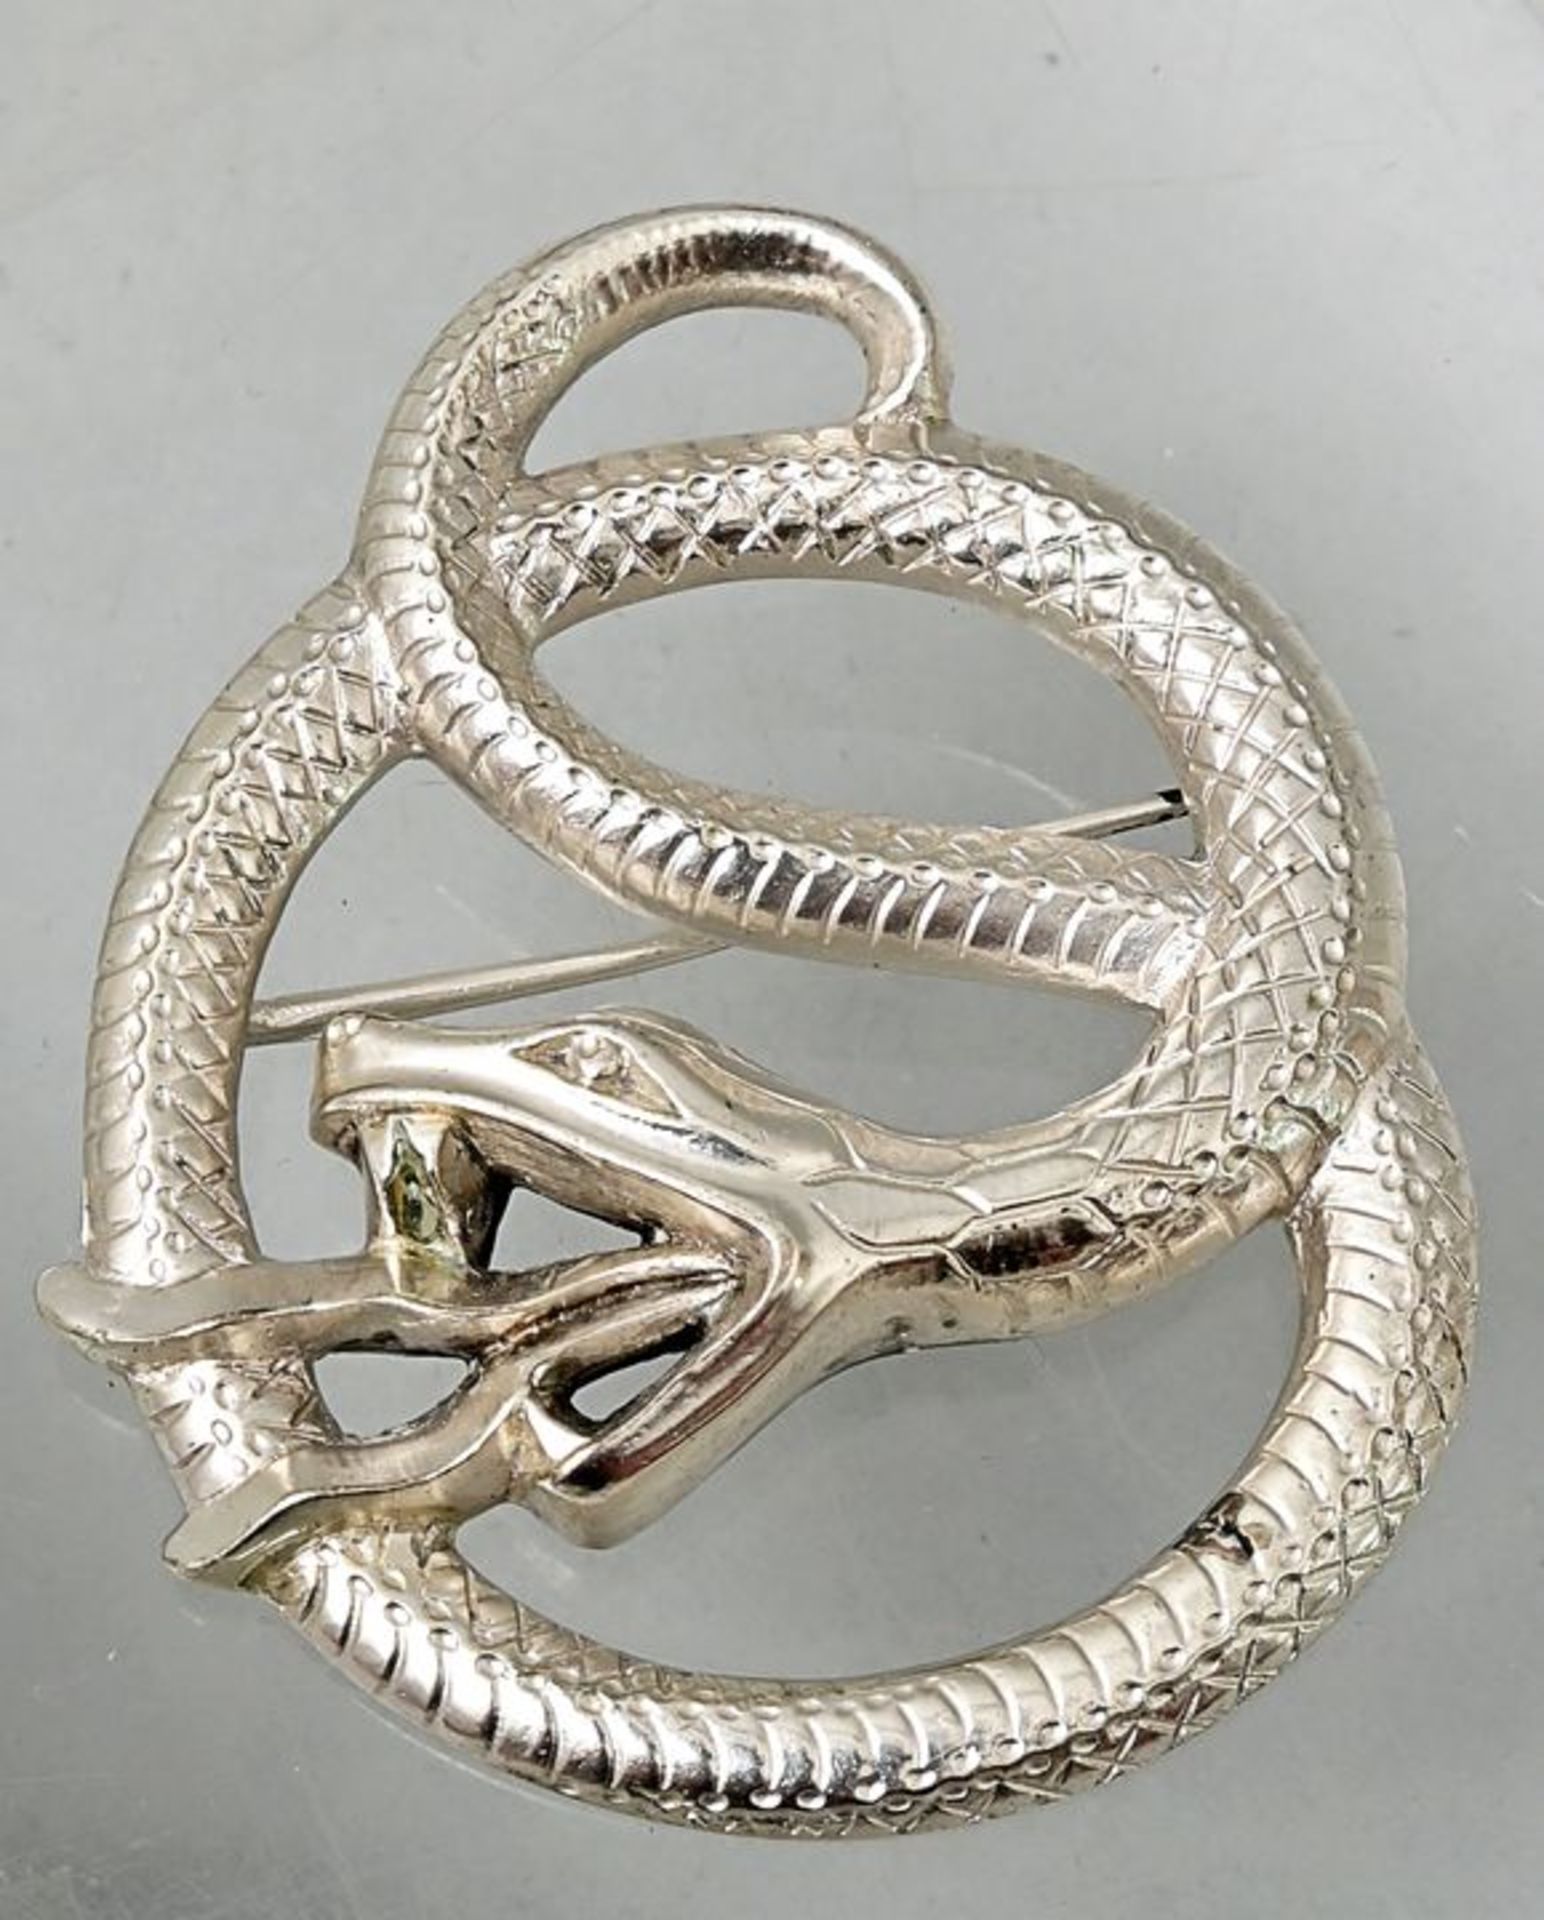 Schlangenbrosche/ snake brooch